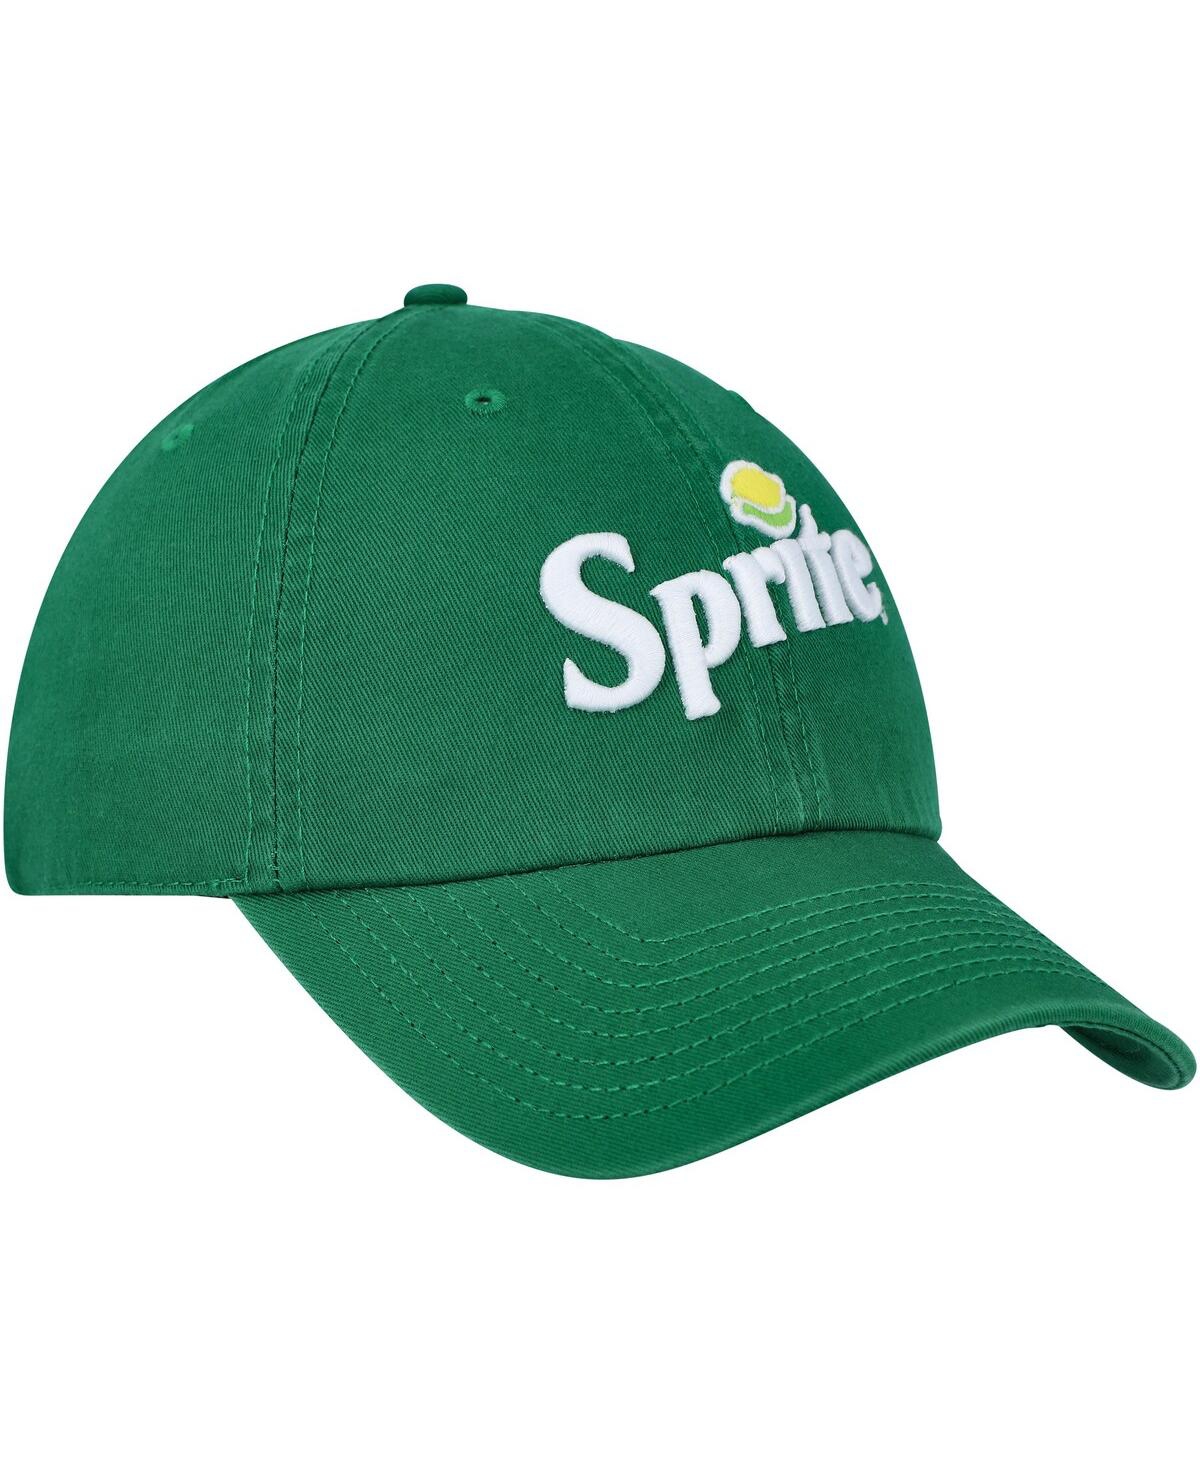 Shop American Needle Men's  Green Sprite Ballpark Adjustable Hat